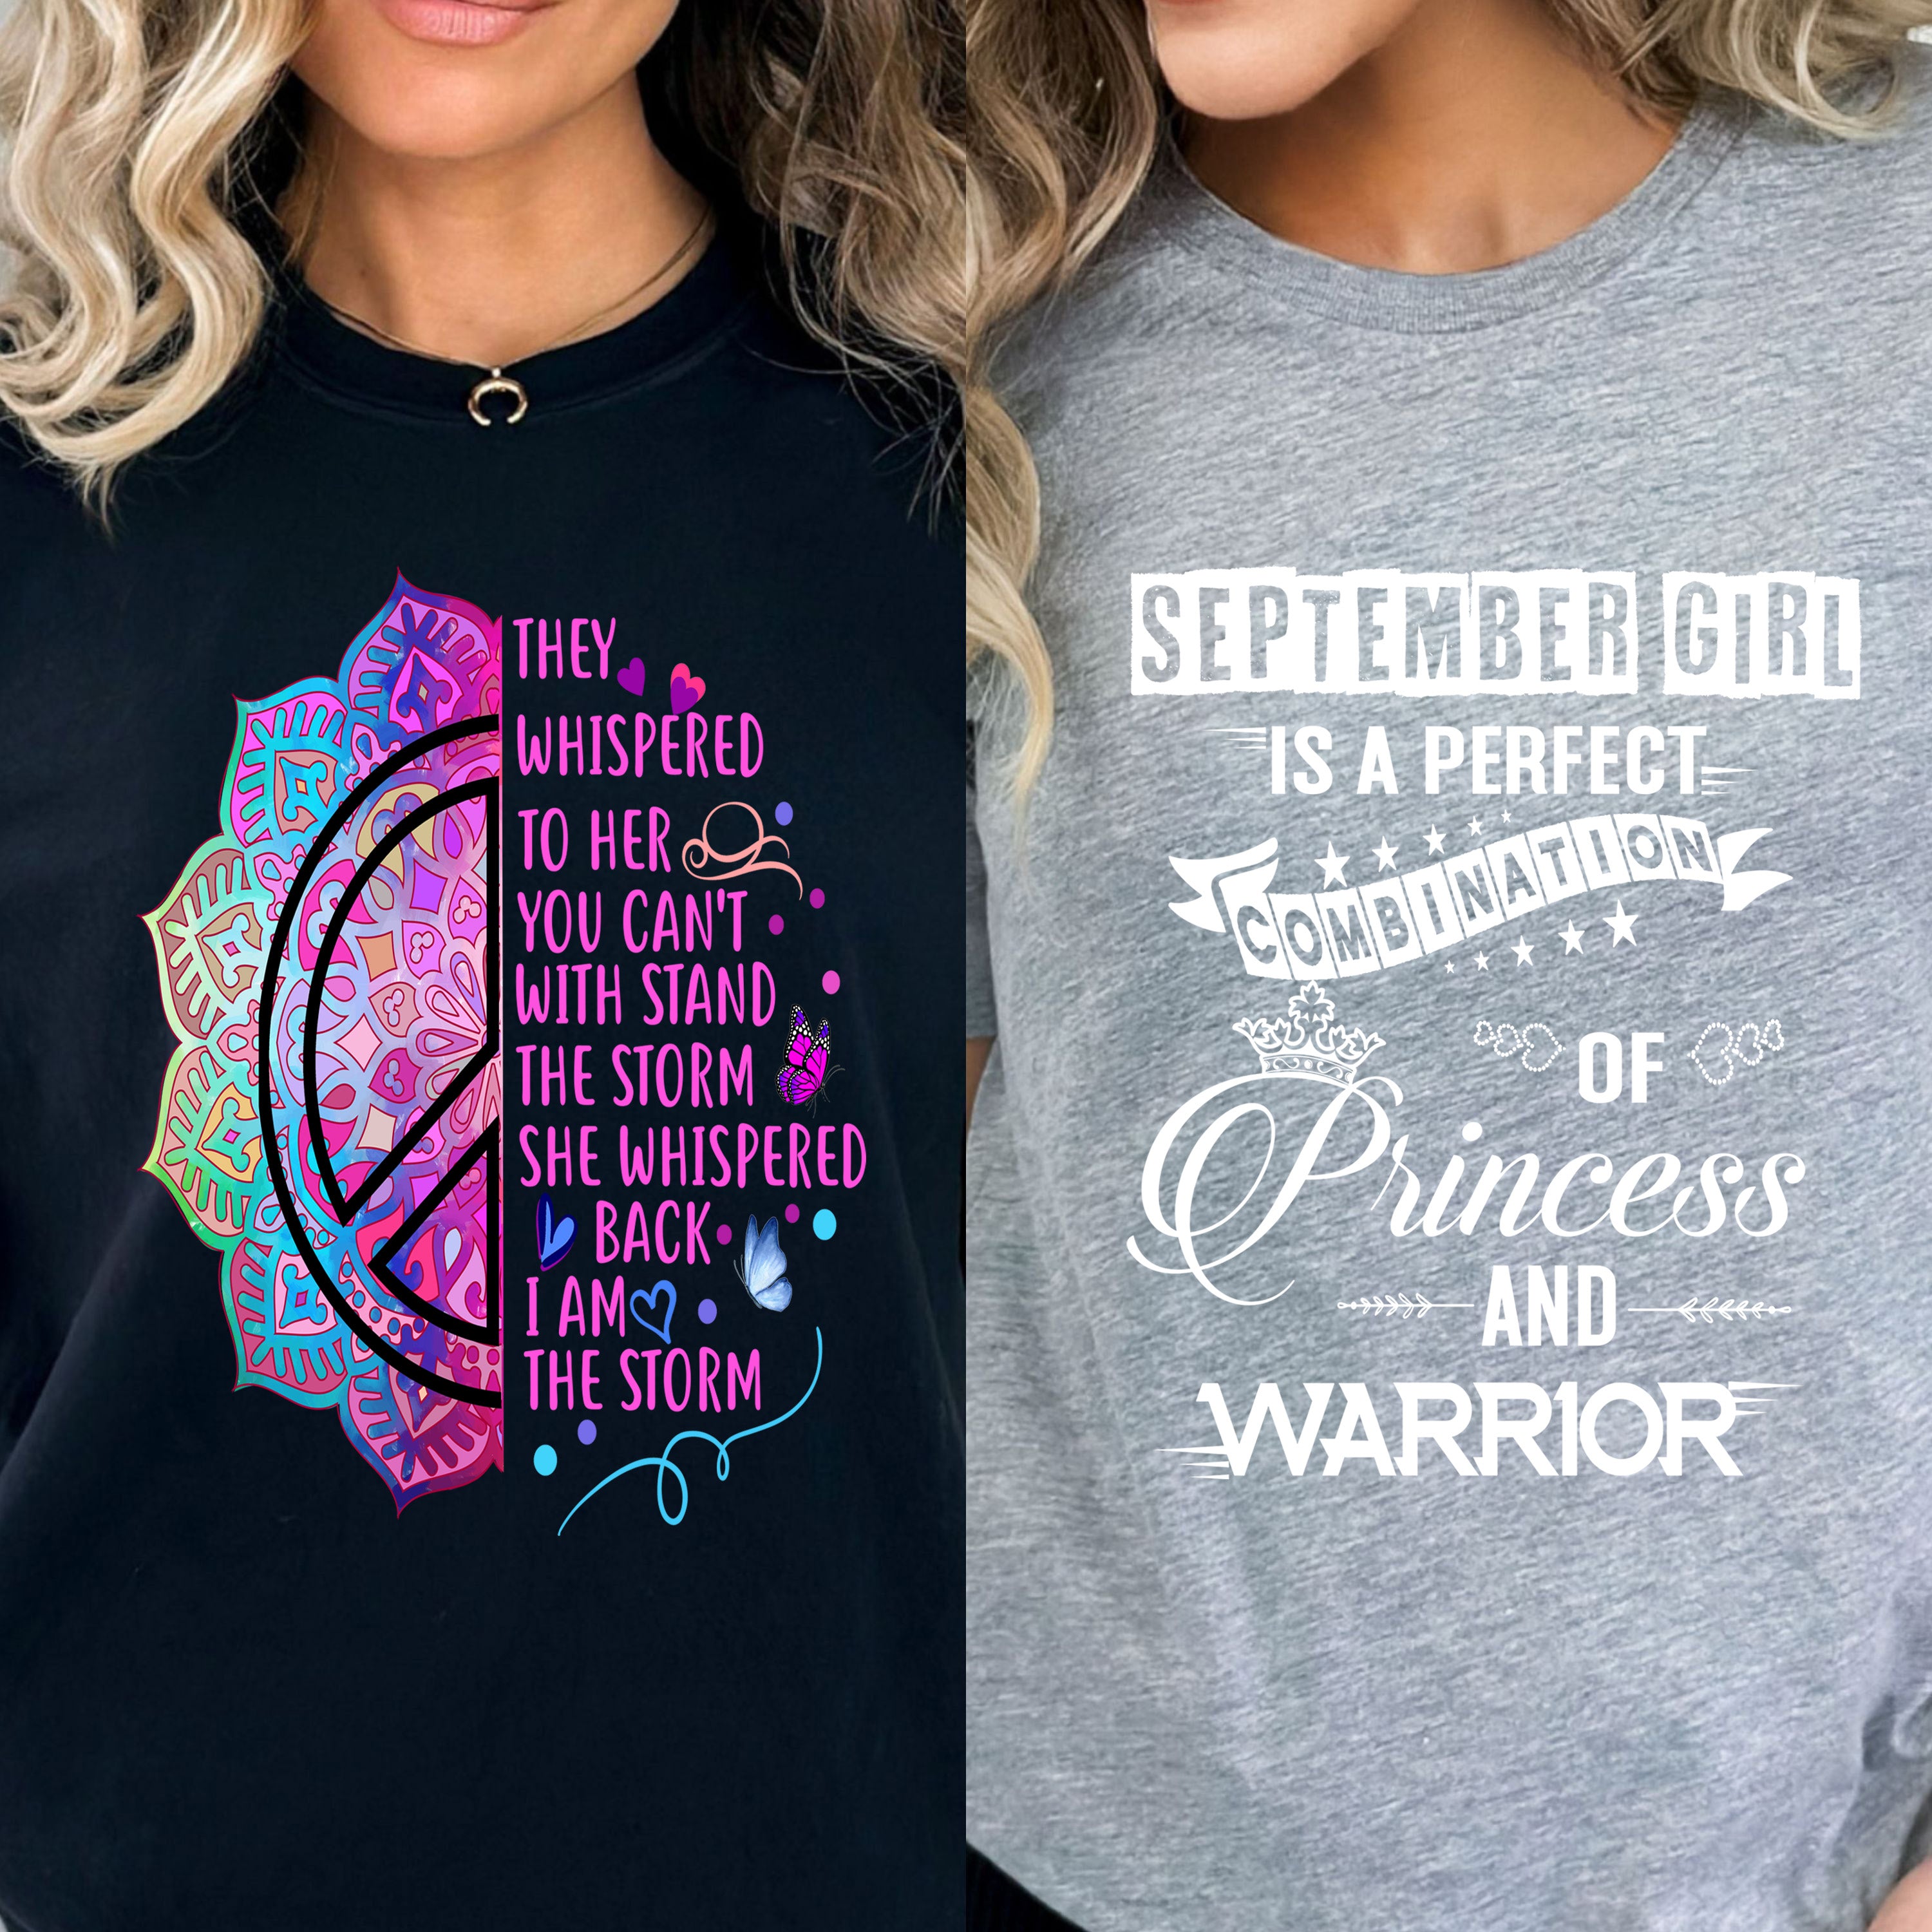 "Whispered + Princess And Warrior-September" Pack Of 2